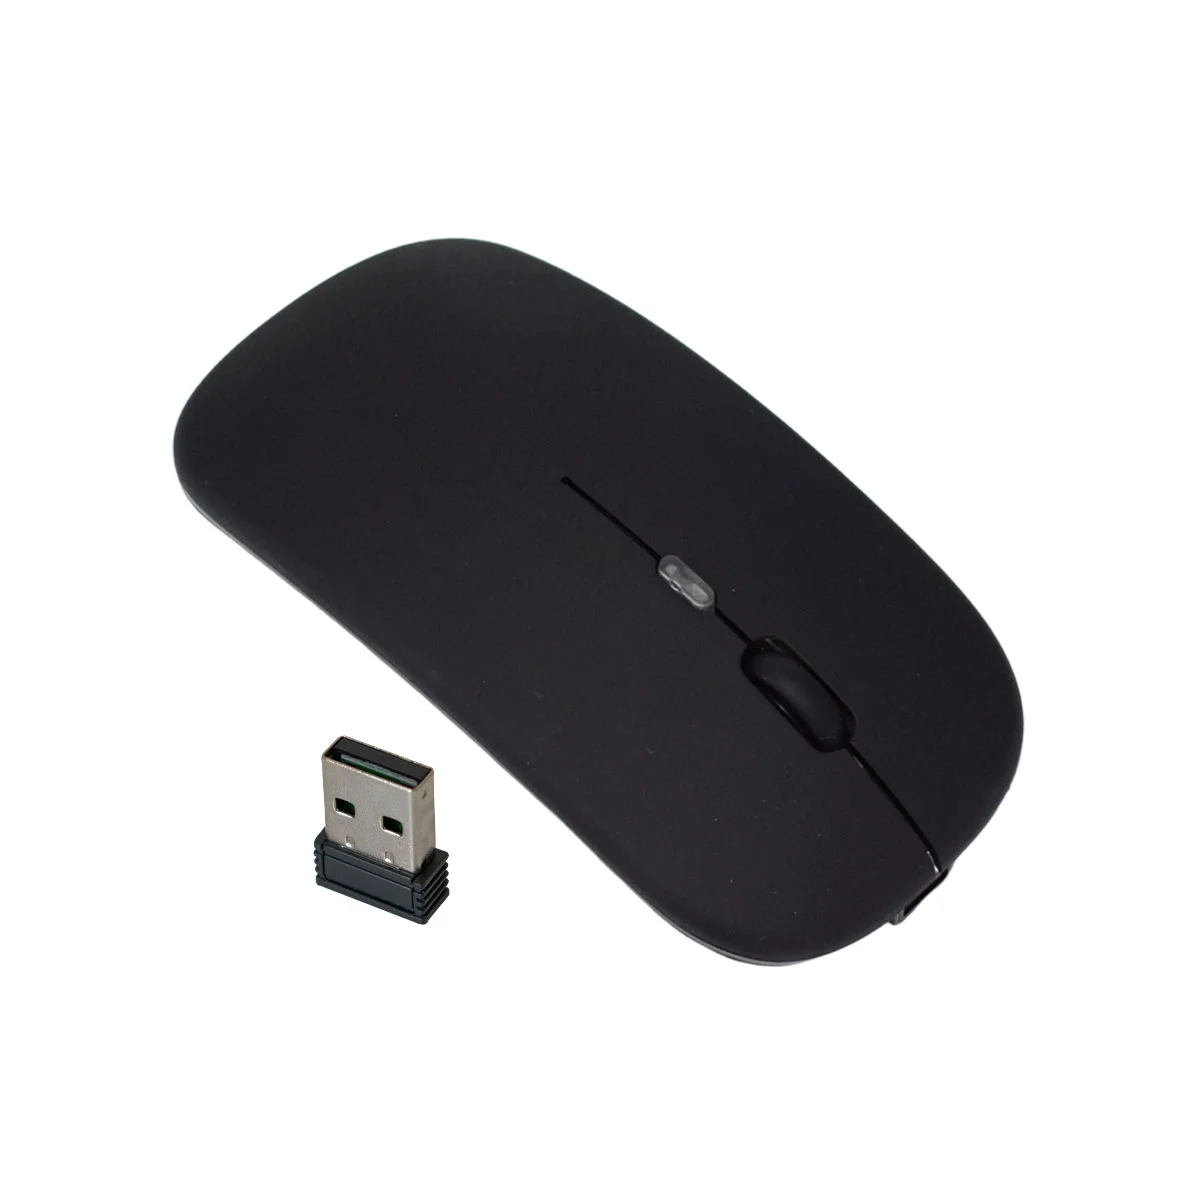 Teclado Mini inalambrico touch pad en español WB 8020 – My Shop